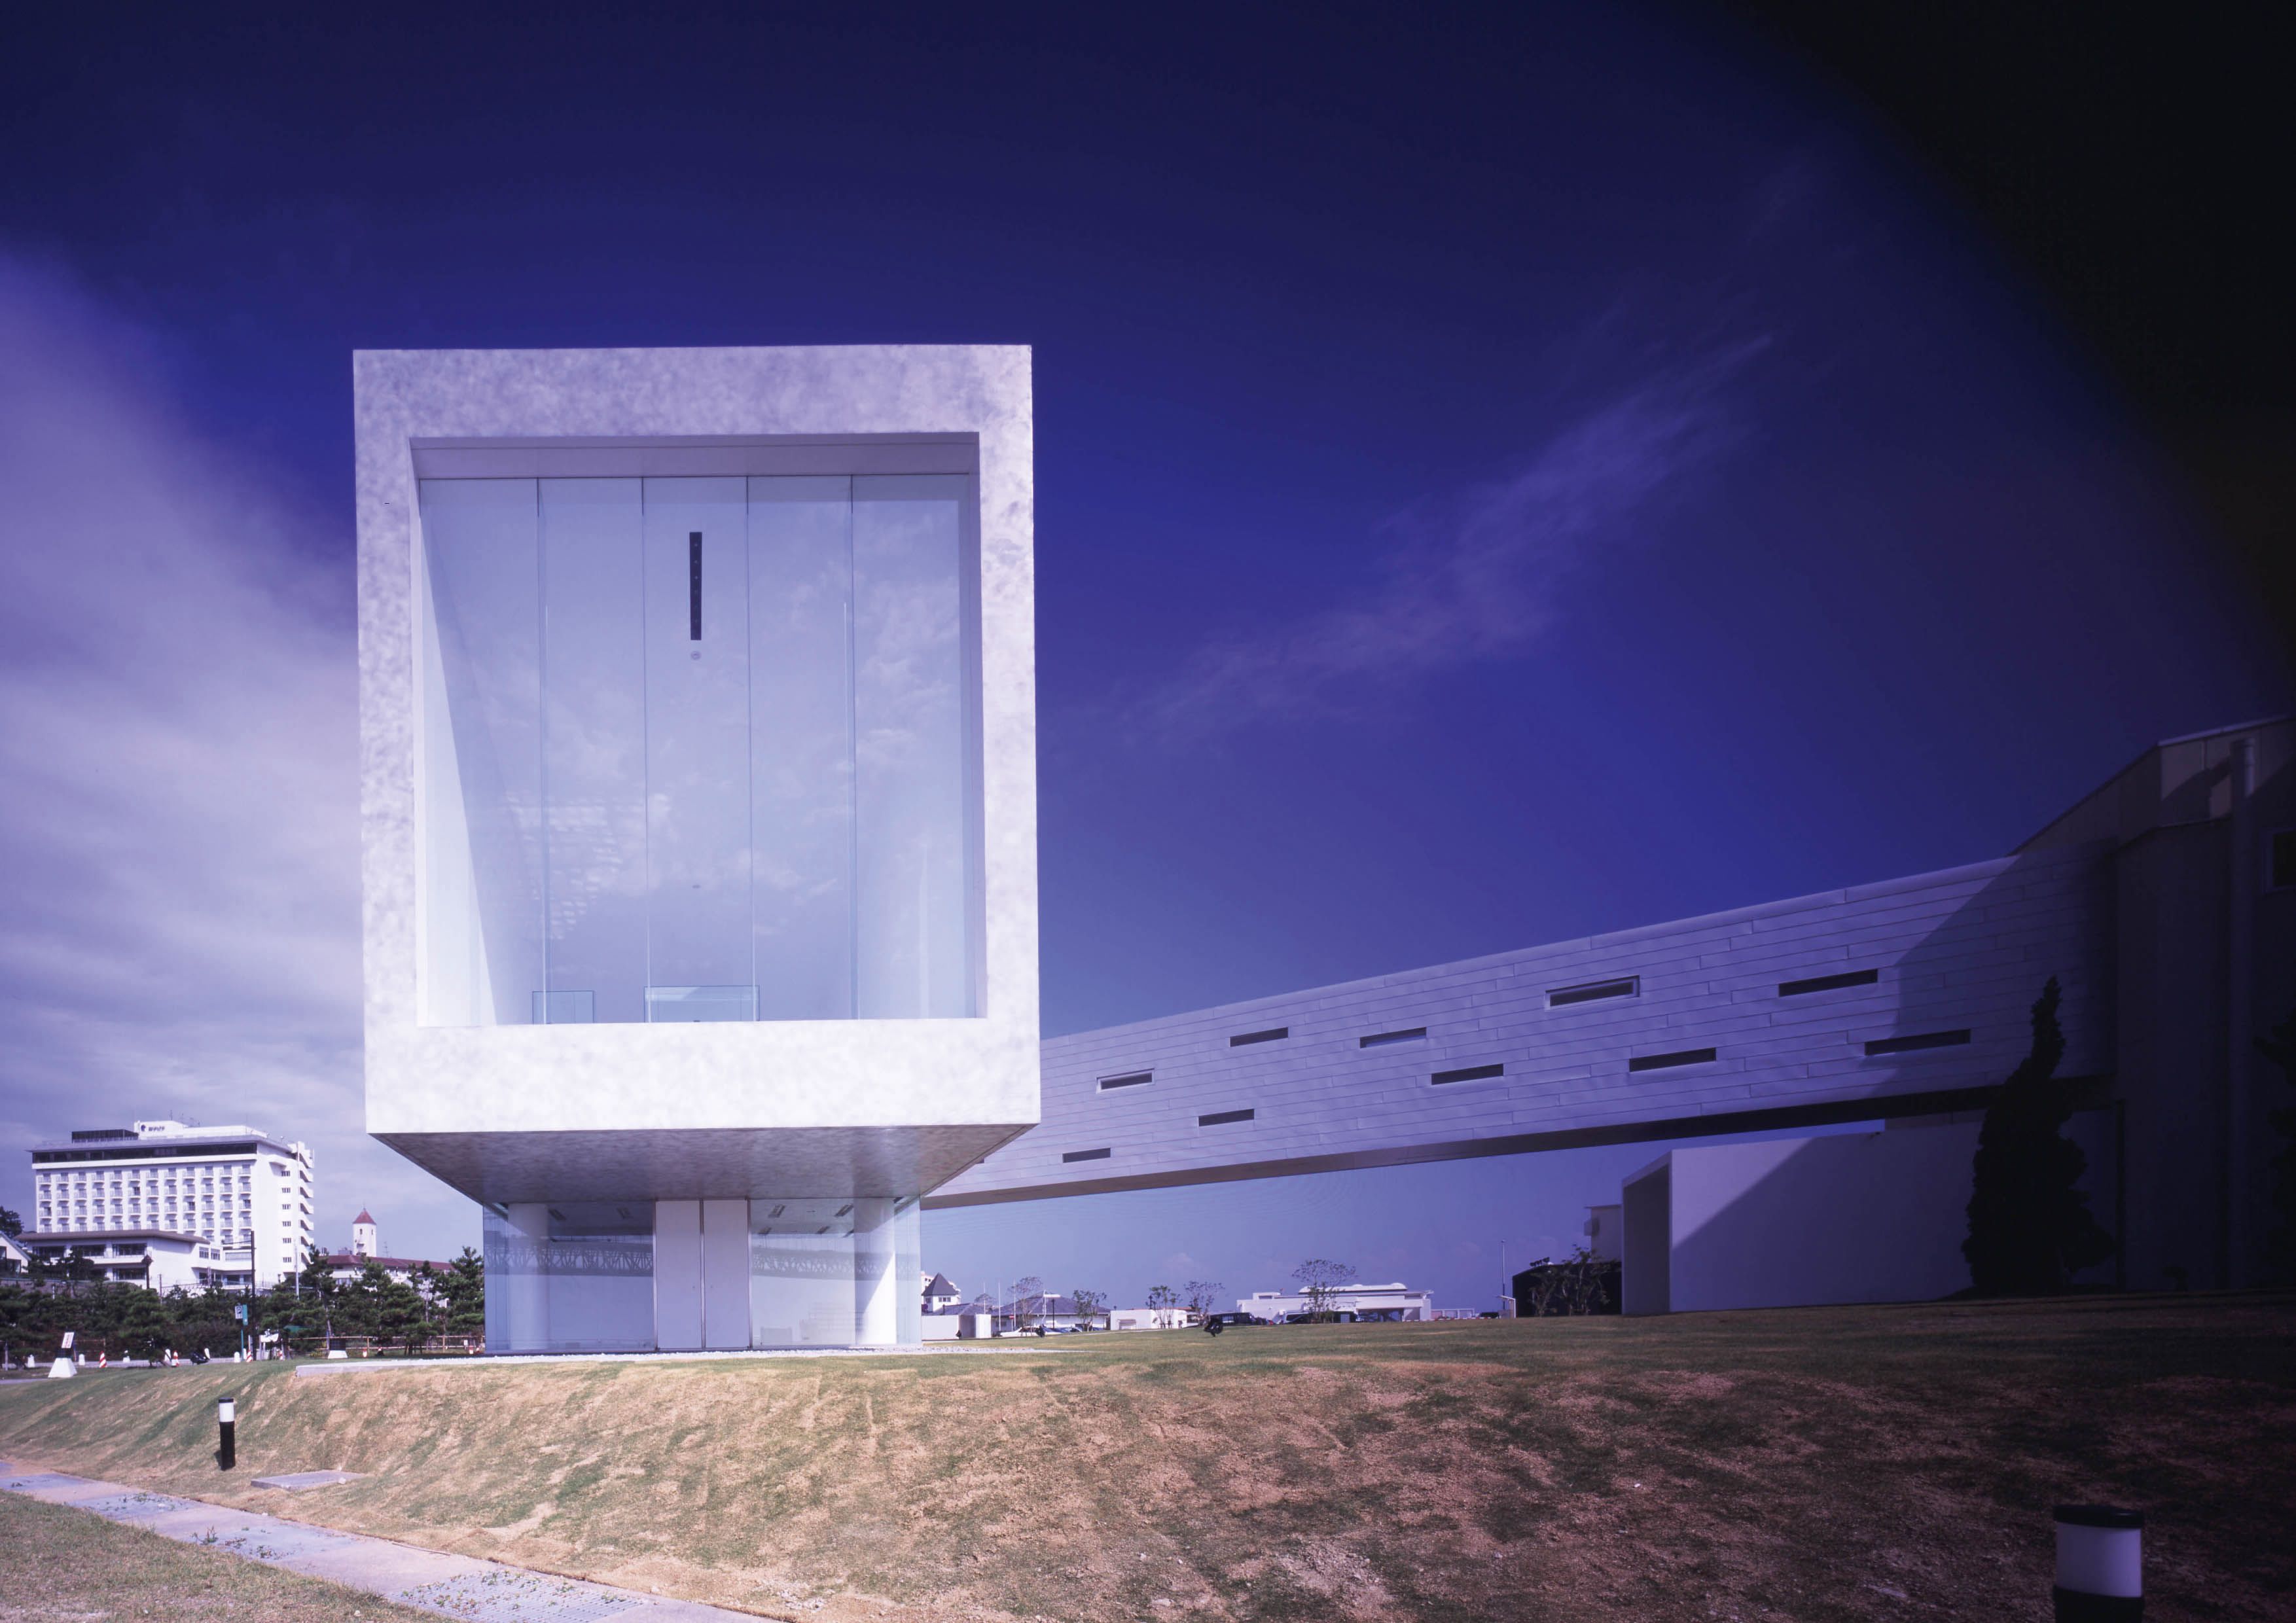 A building of wonders - Inside Salk